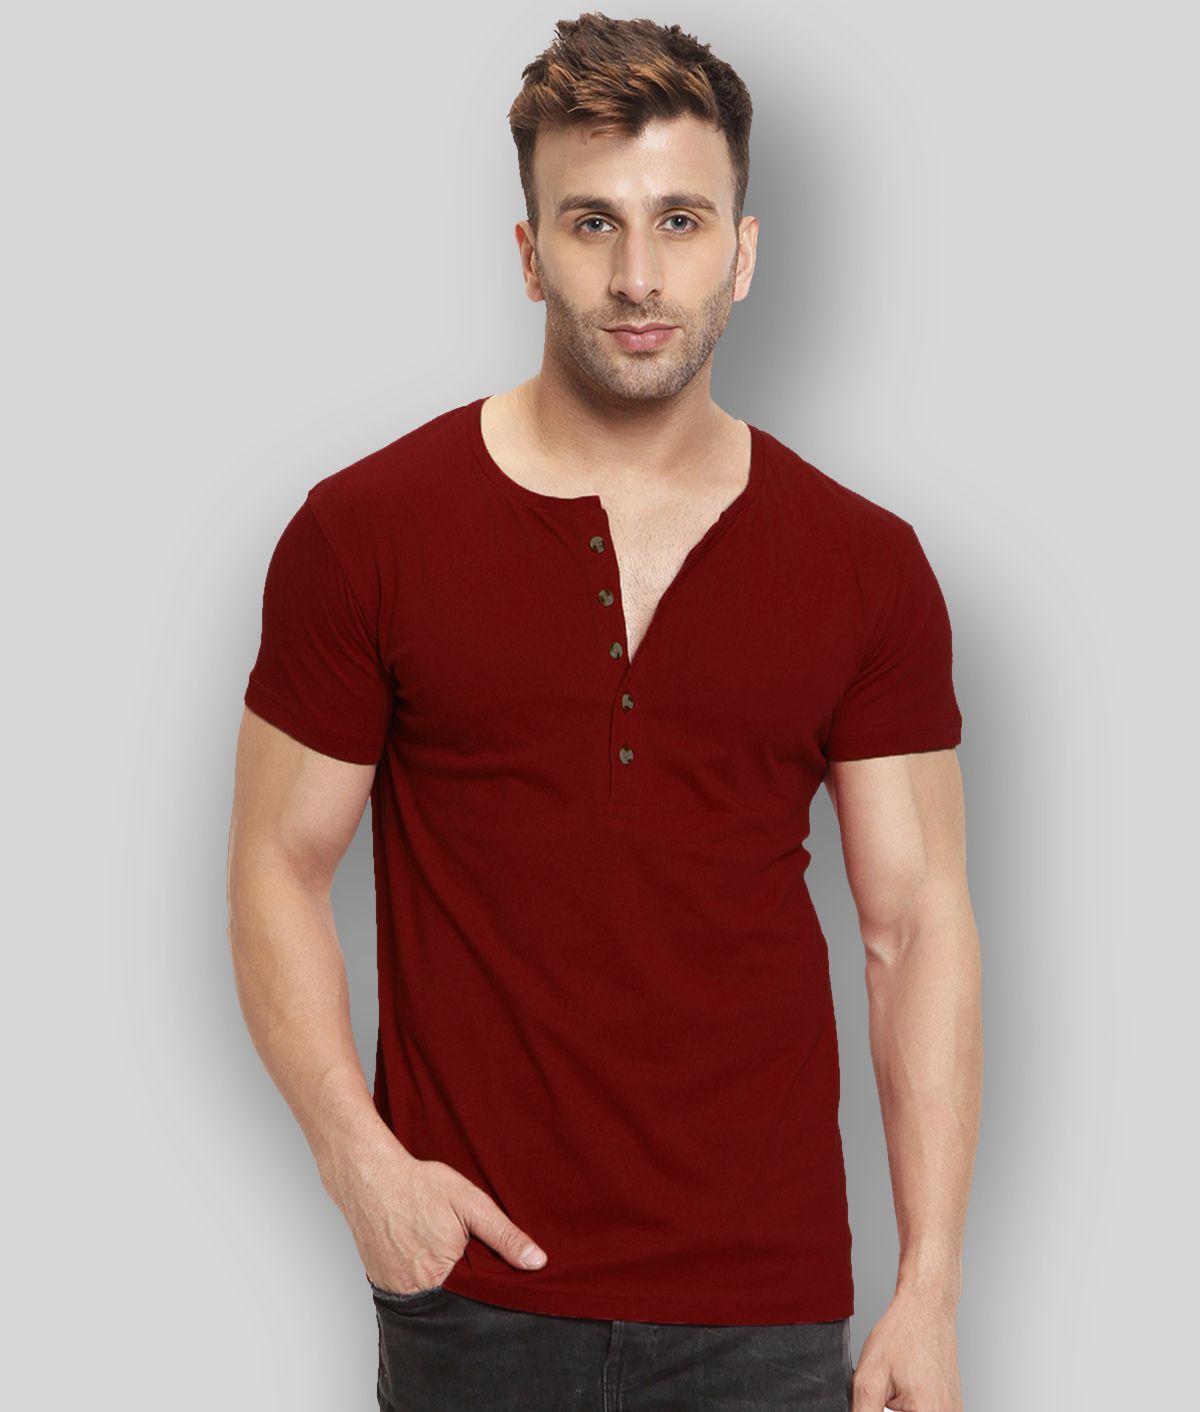 Leotude - Maroon Cotton Blend Regular Fit Men's T-Shirt ( Pack of 1 )